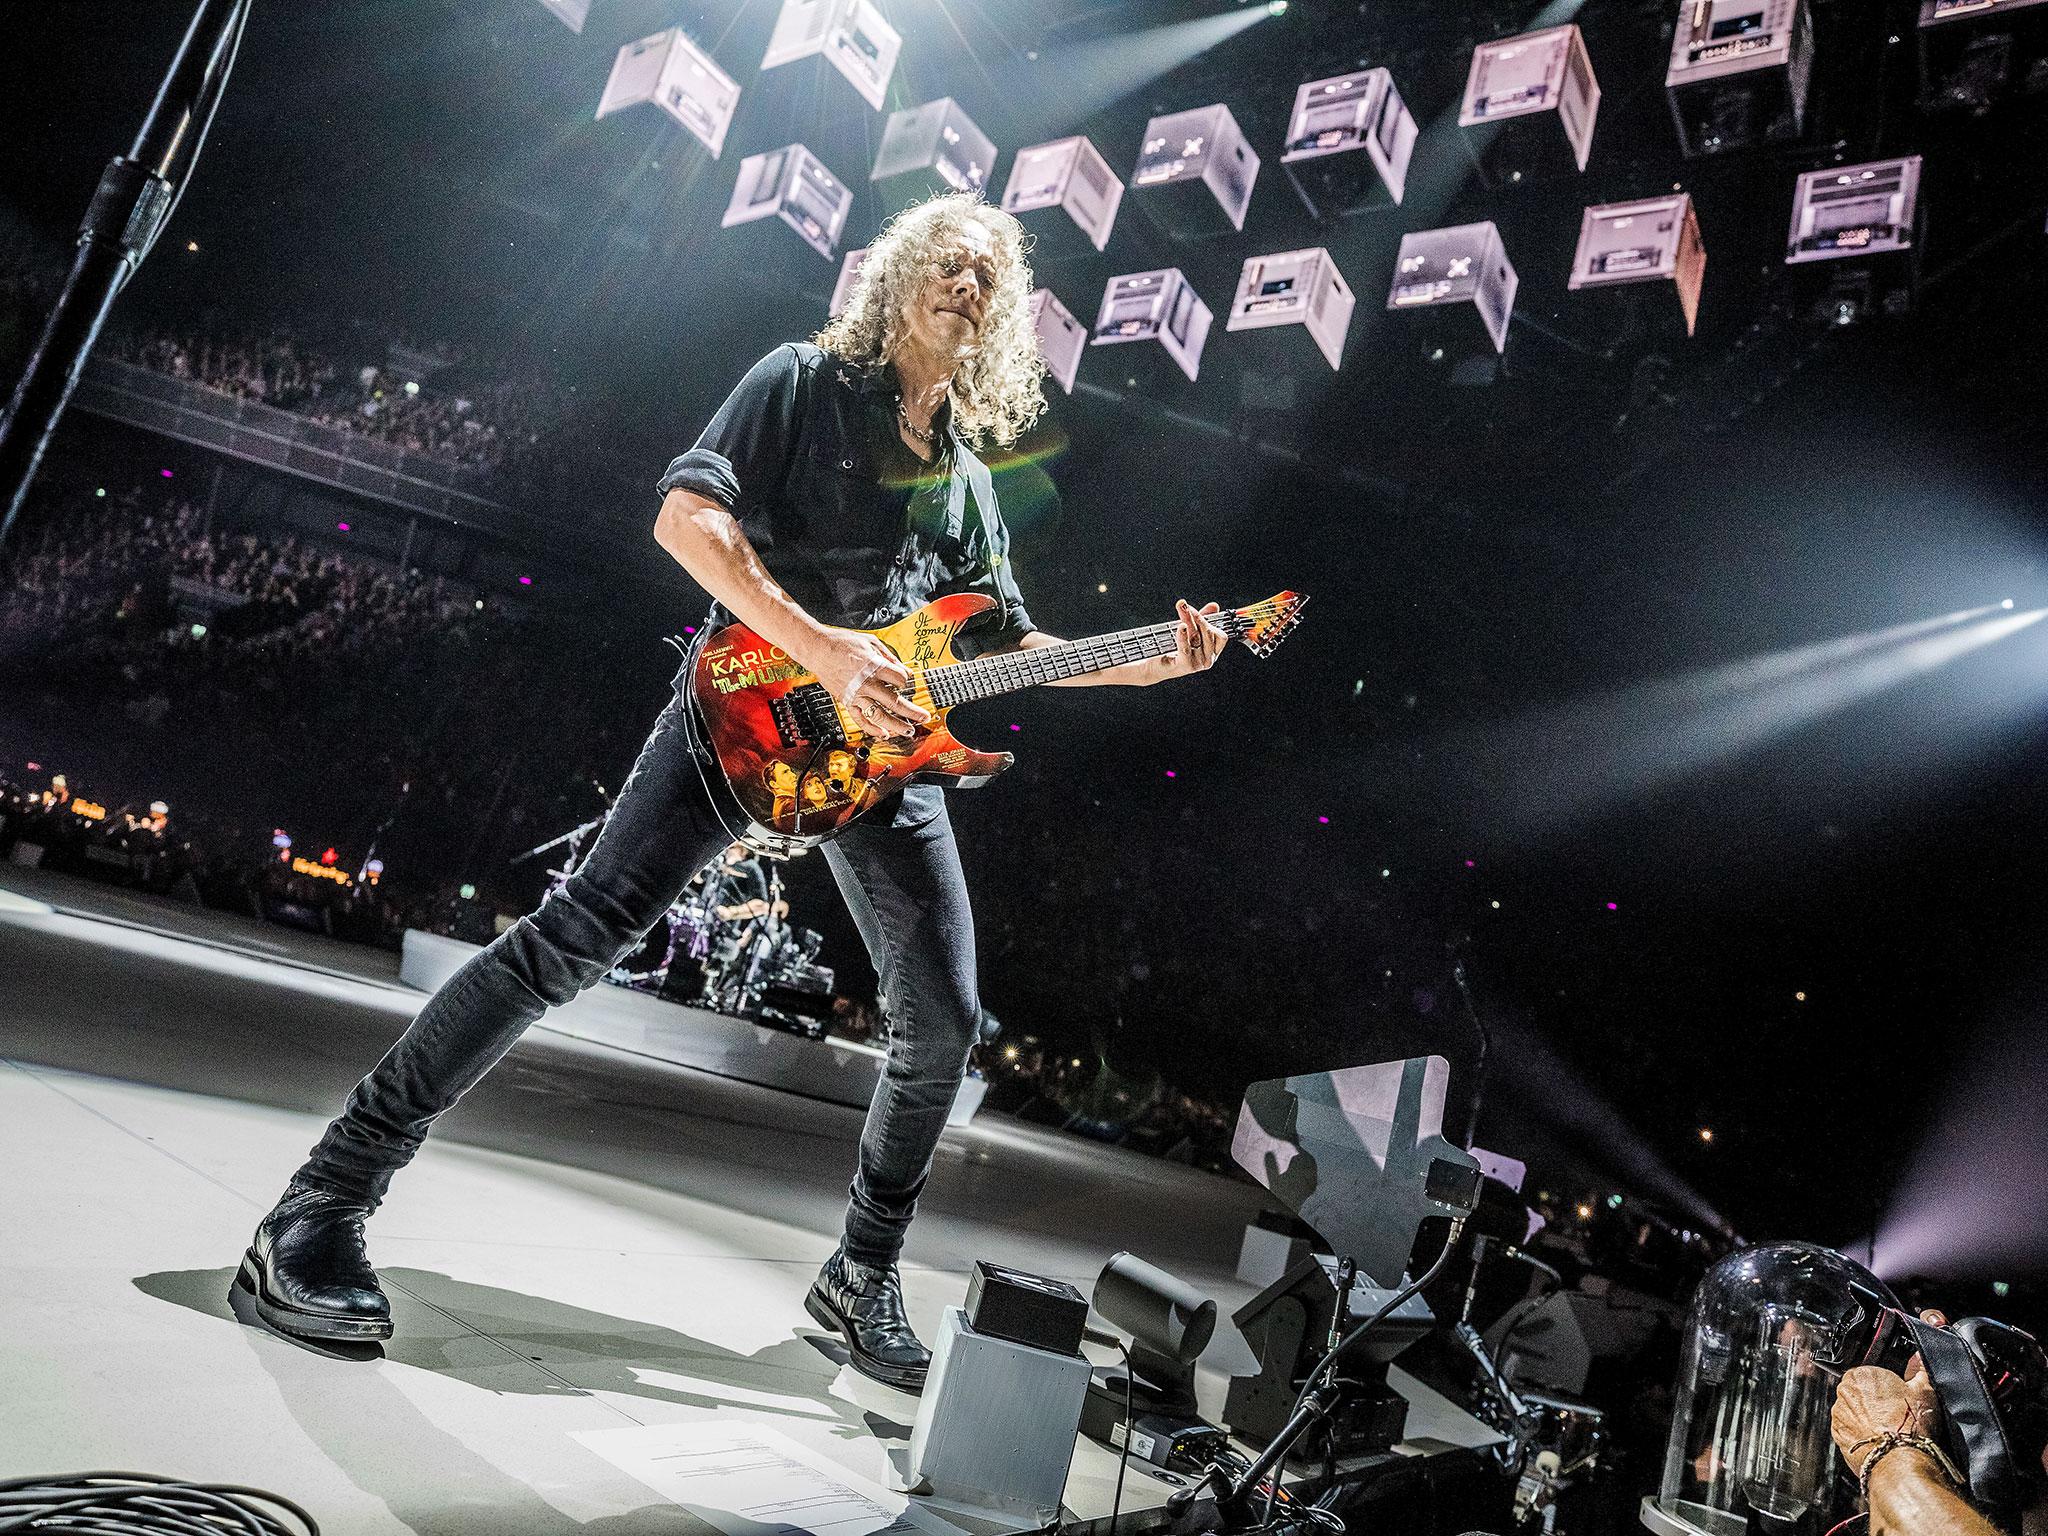 Metallica guitarist Kirk Hammett?performing at Ziggo Dome in Amsterdam